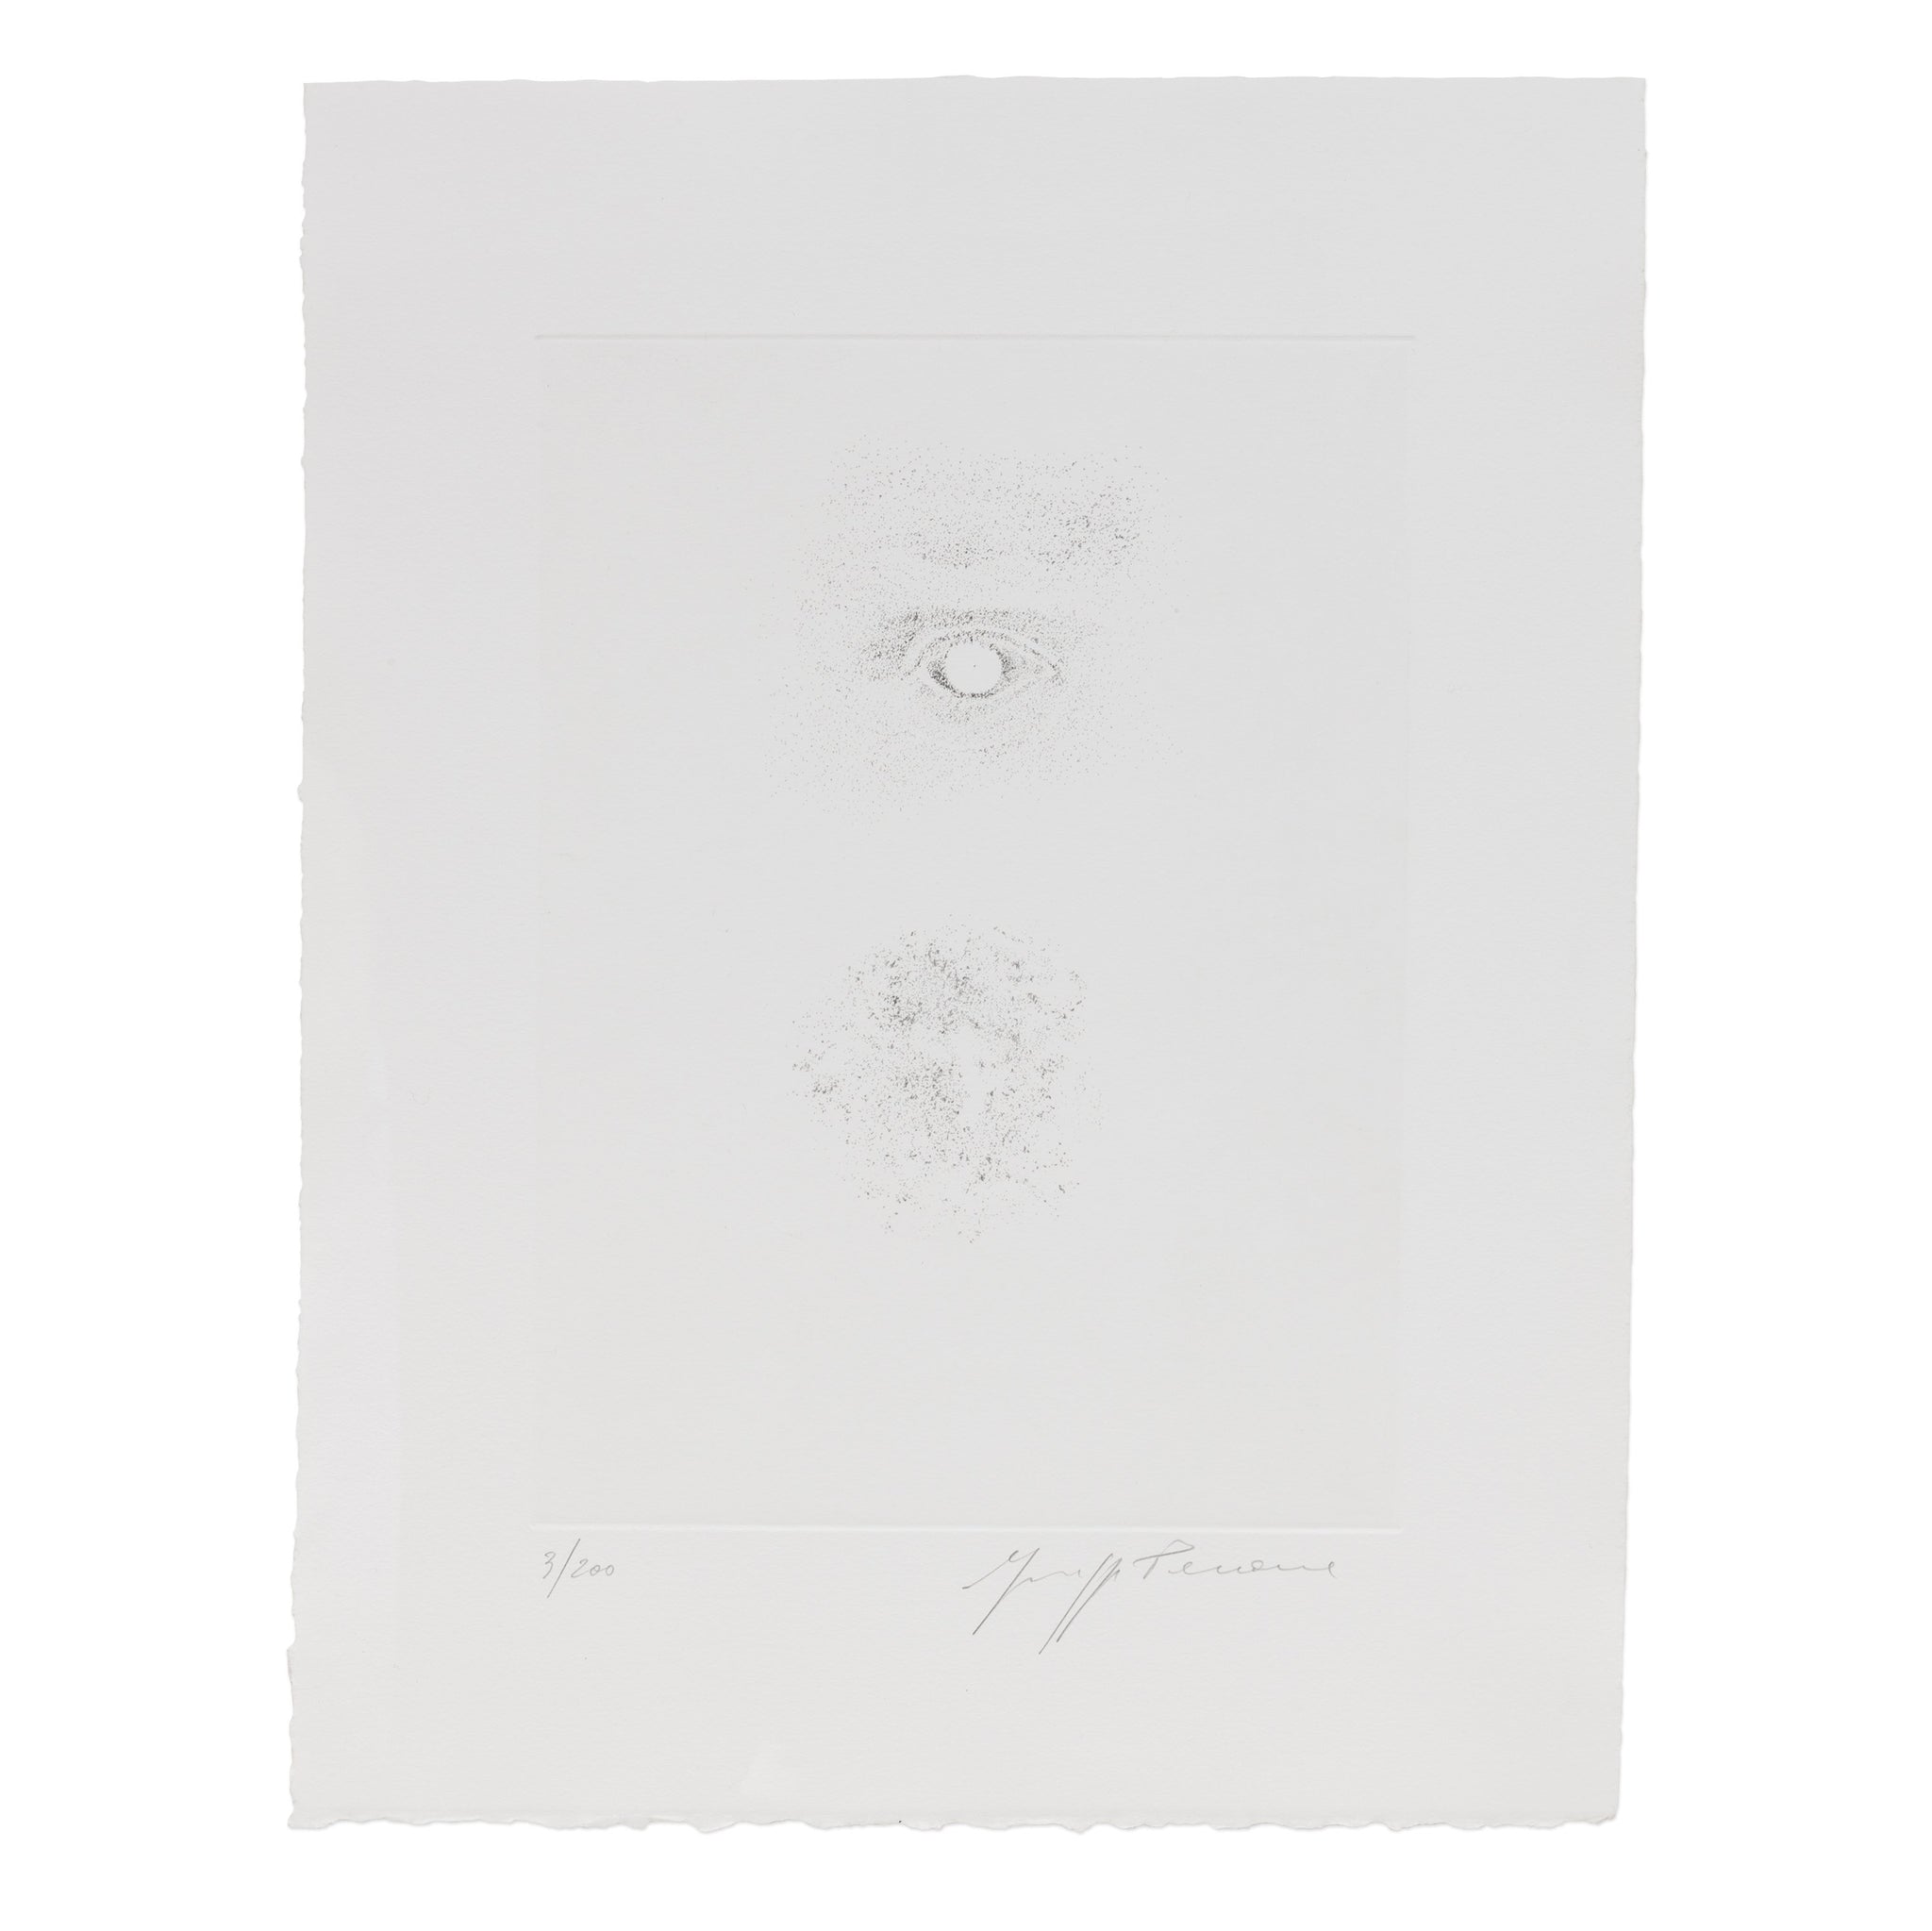 Giuseppe Penone: Identity (White) print